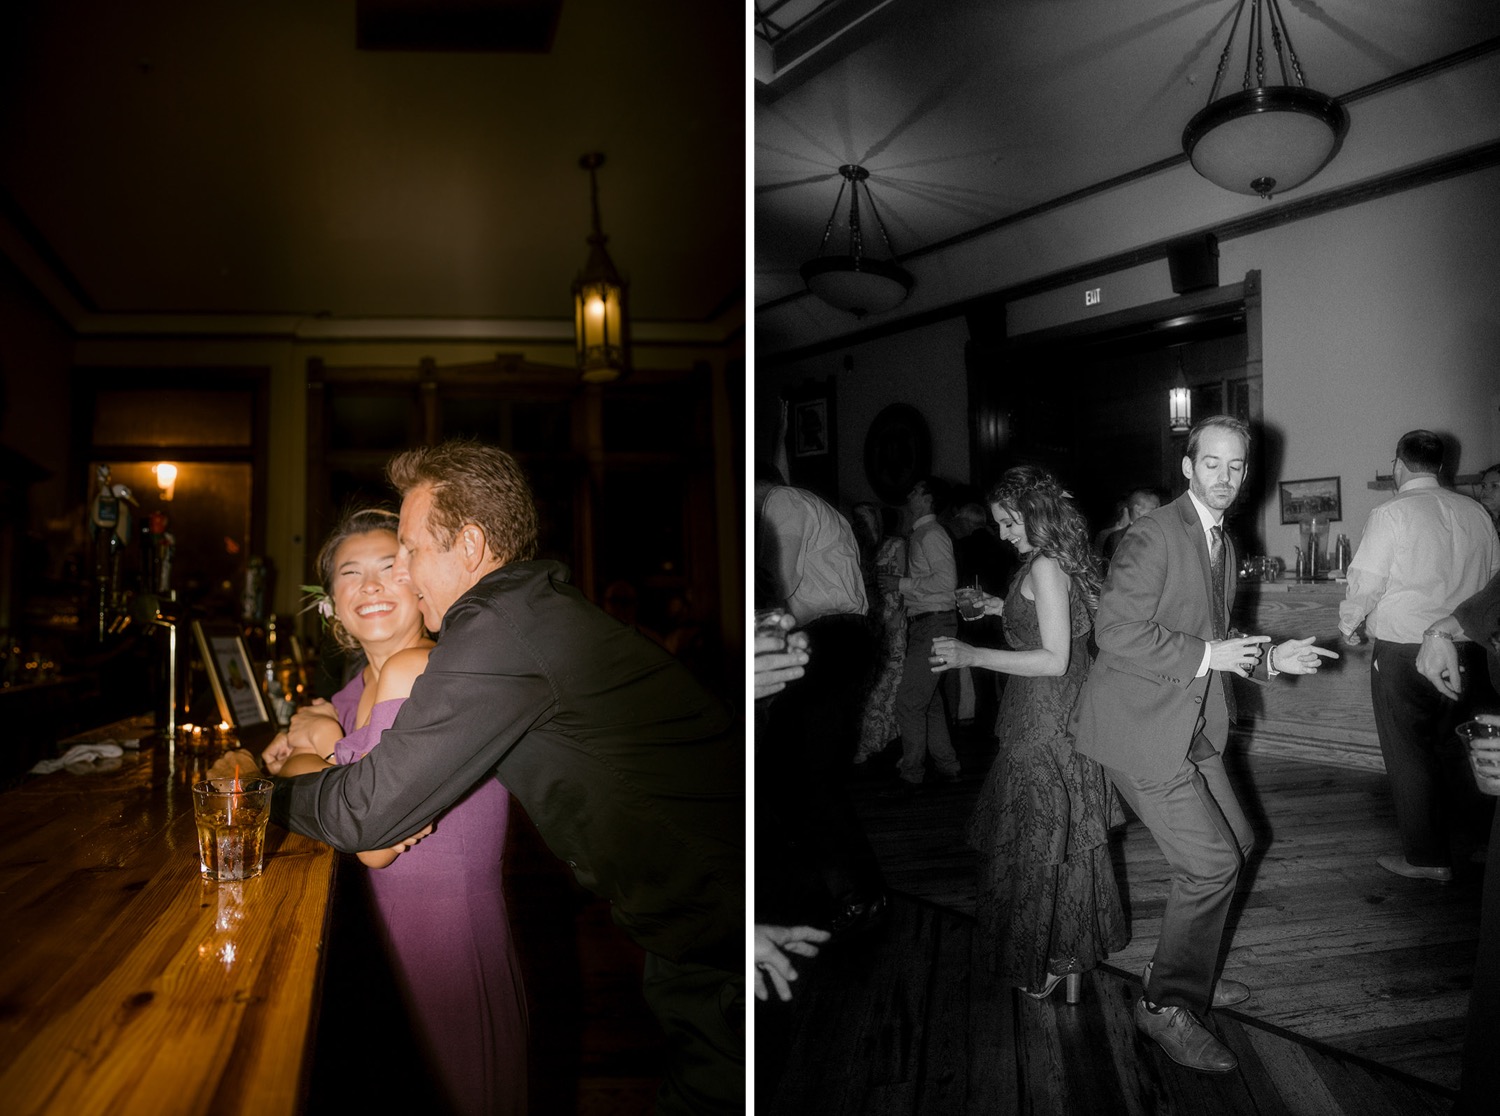 couples kissing dancing wedding reception